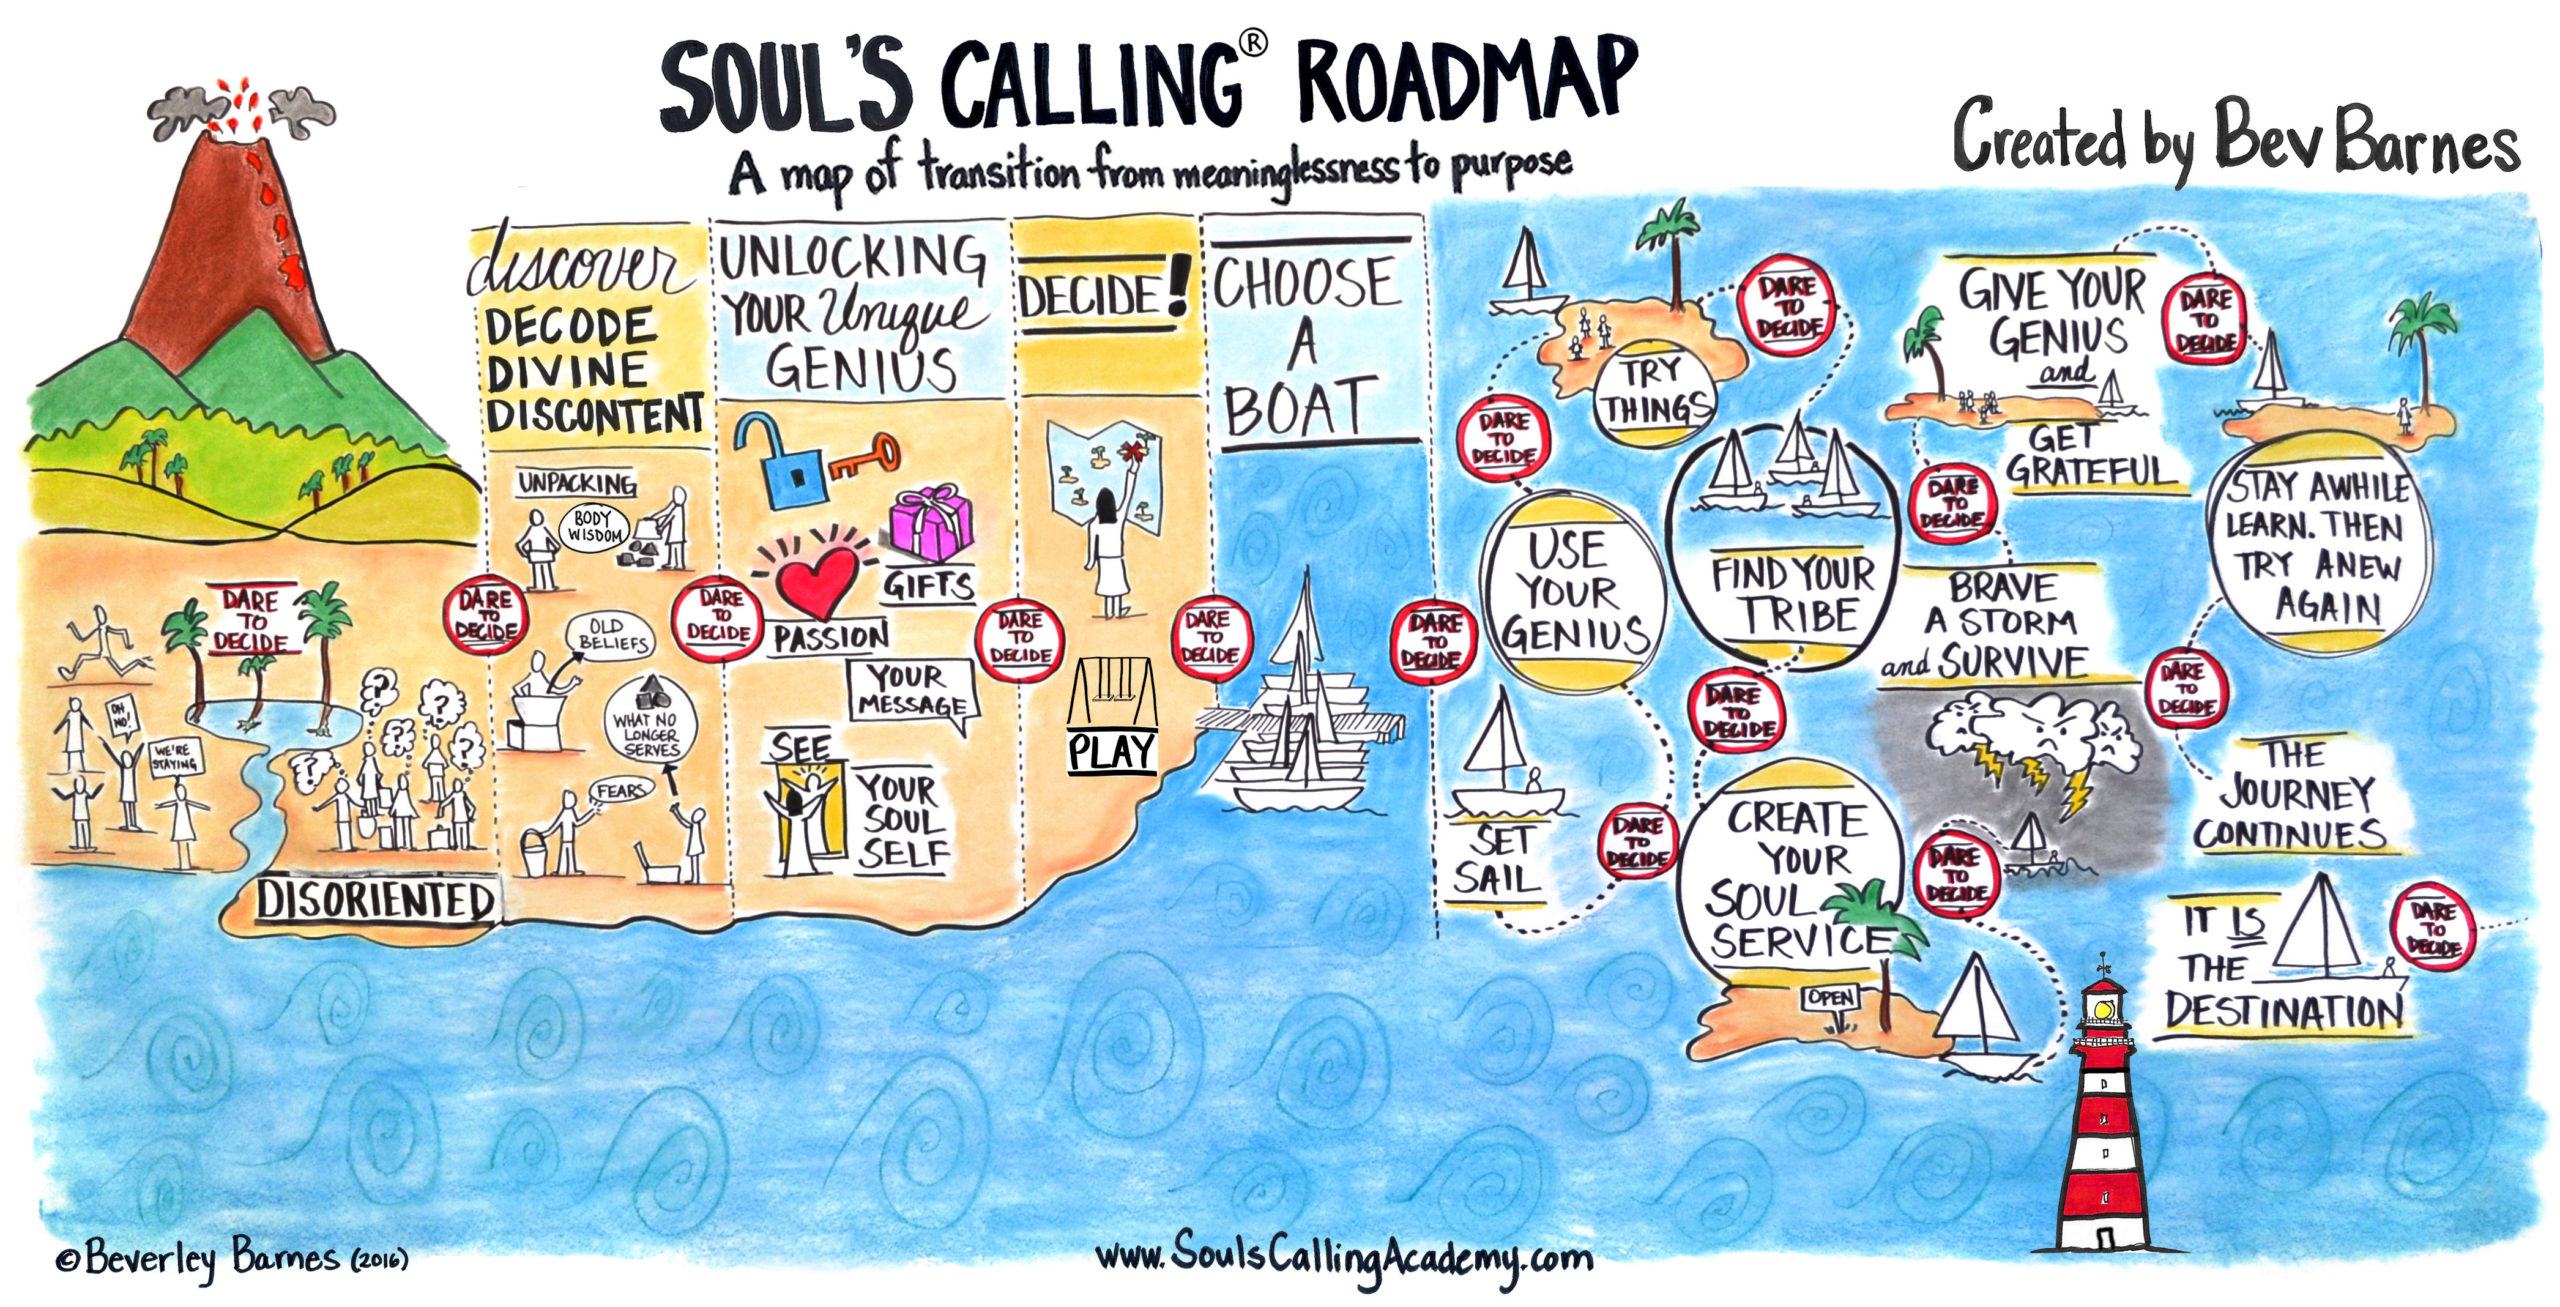 The Soul's Calling Roadmap by Bev Barnes